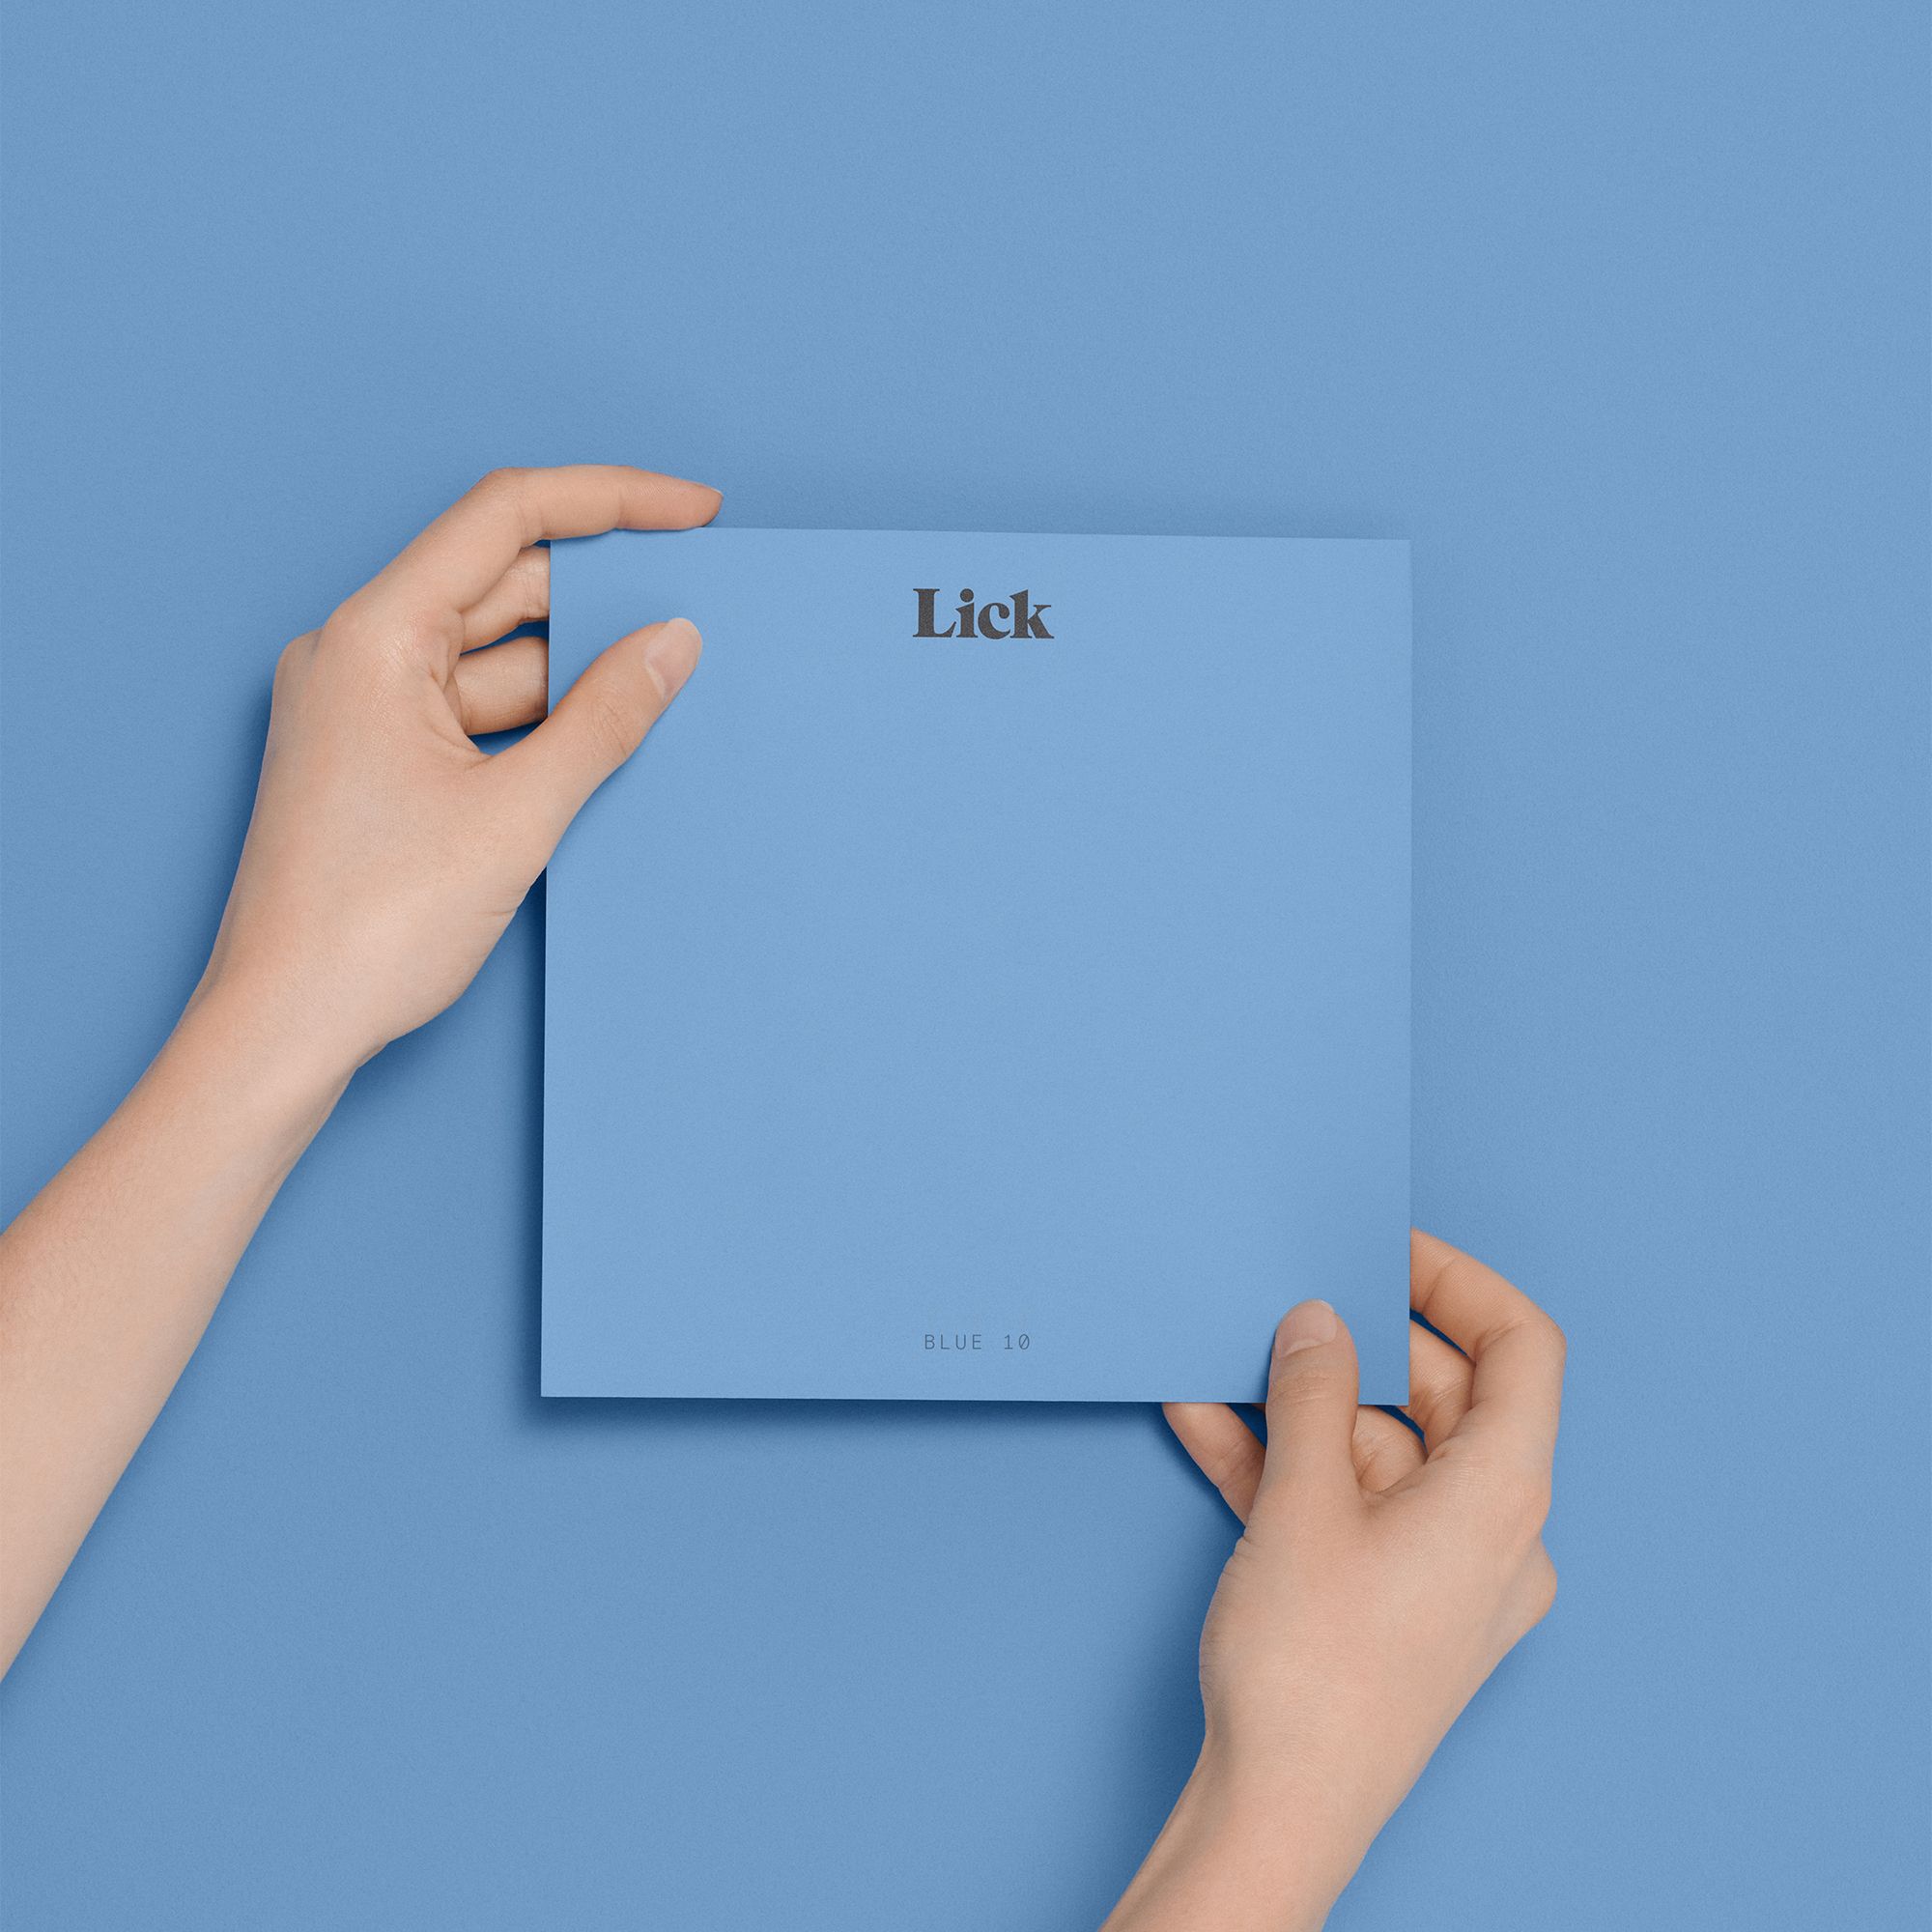 Lick Blue 10 Peel & stick Tester